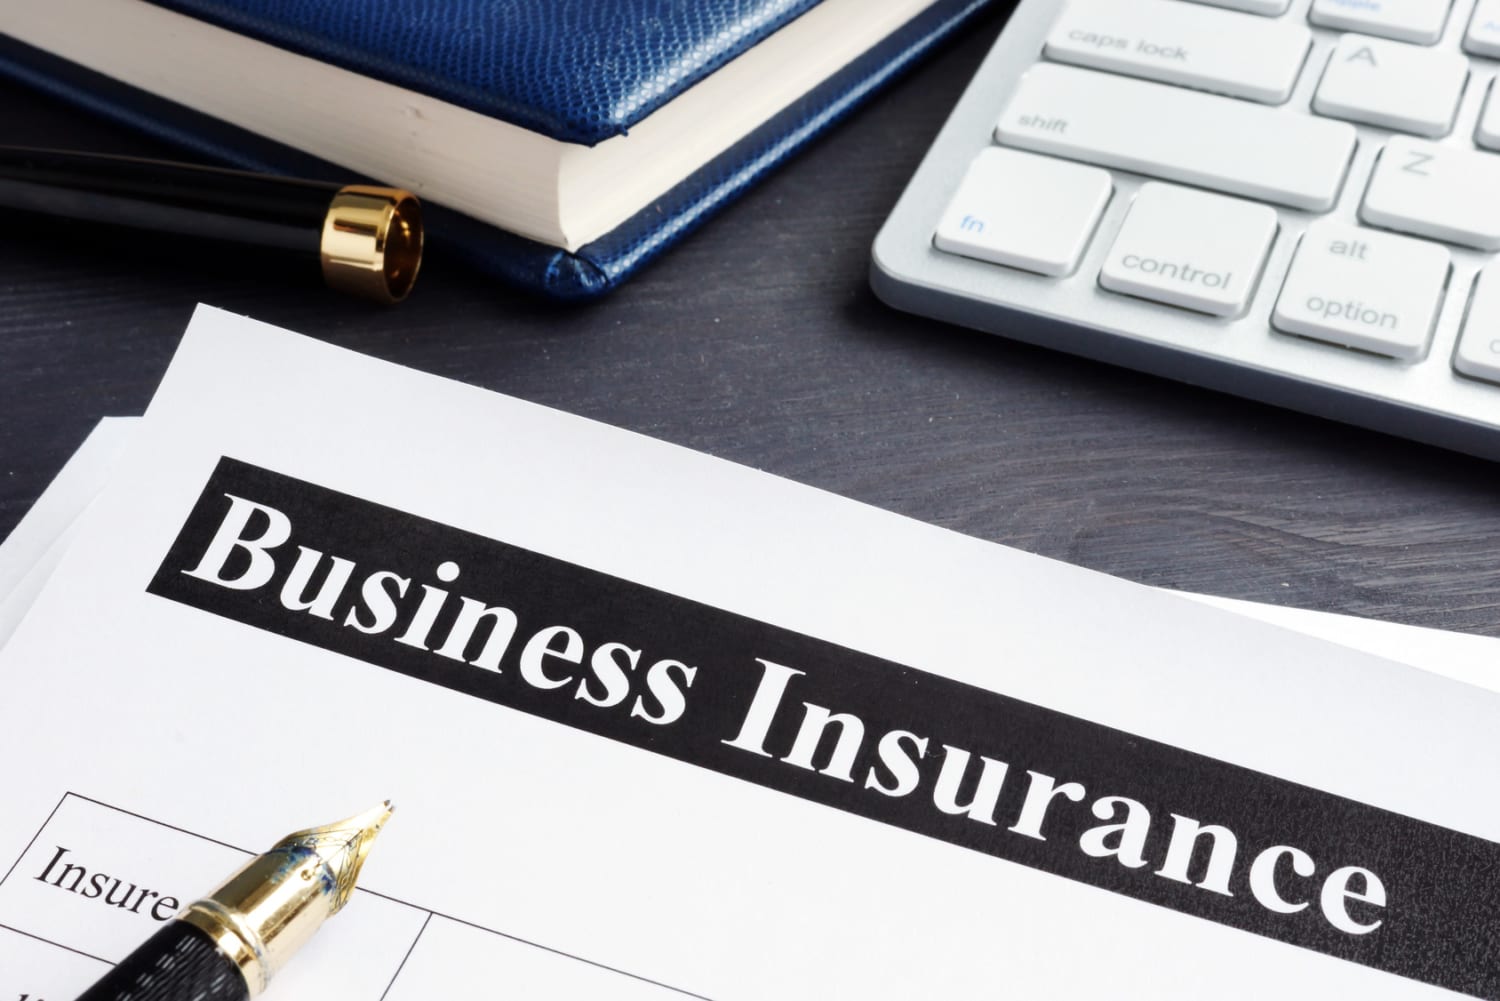 small business insurance checklist